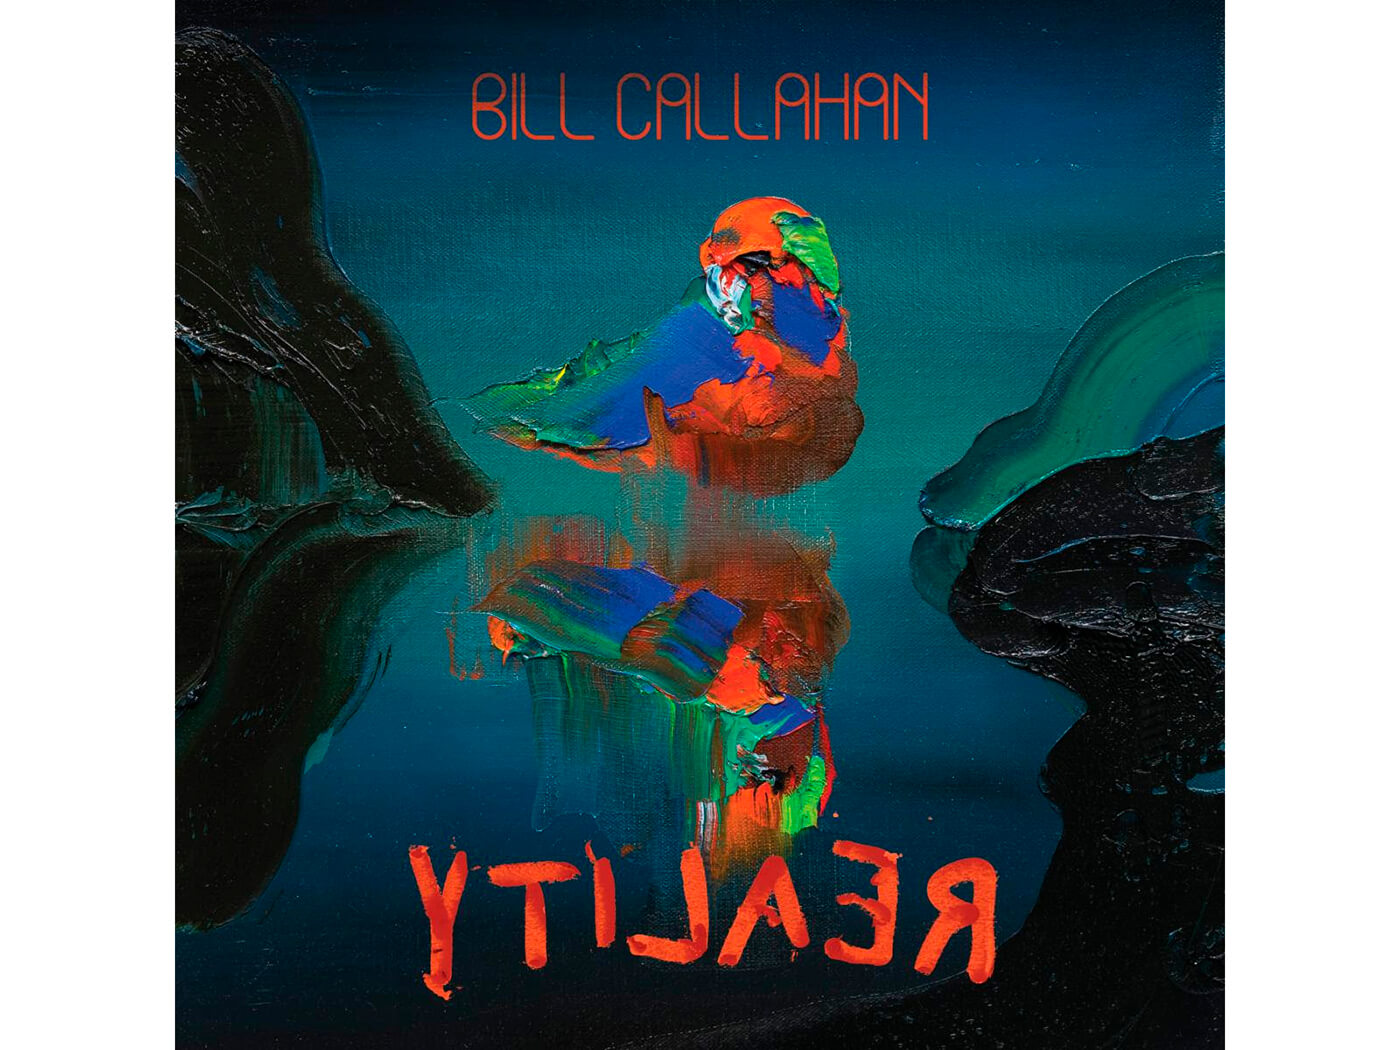 Bill Callahan announces new album, YTI⅃AƎЯ